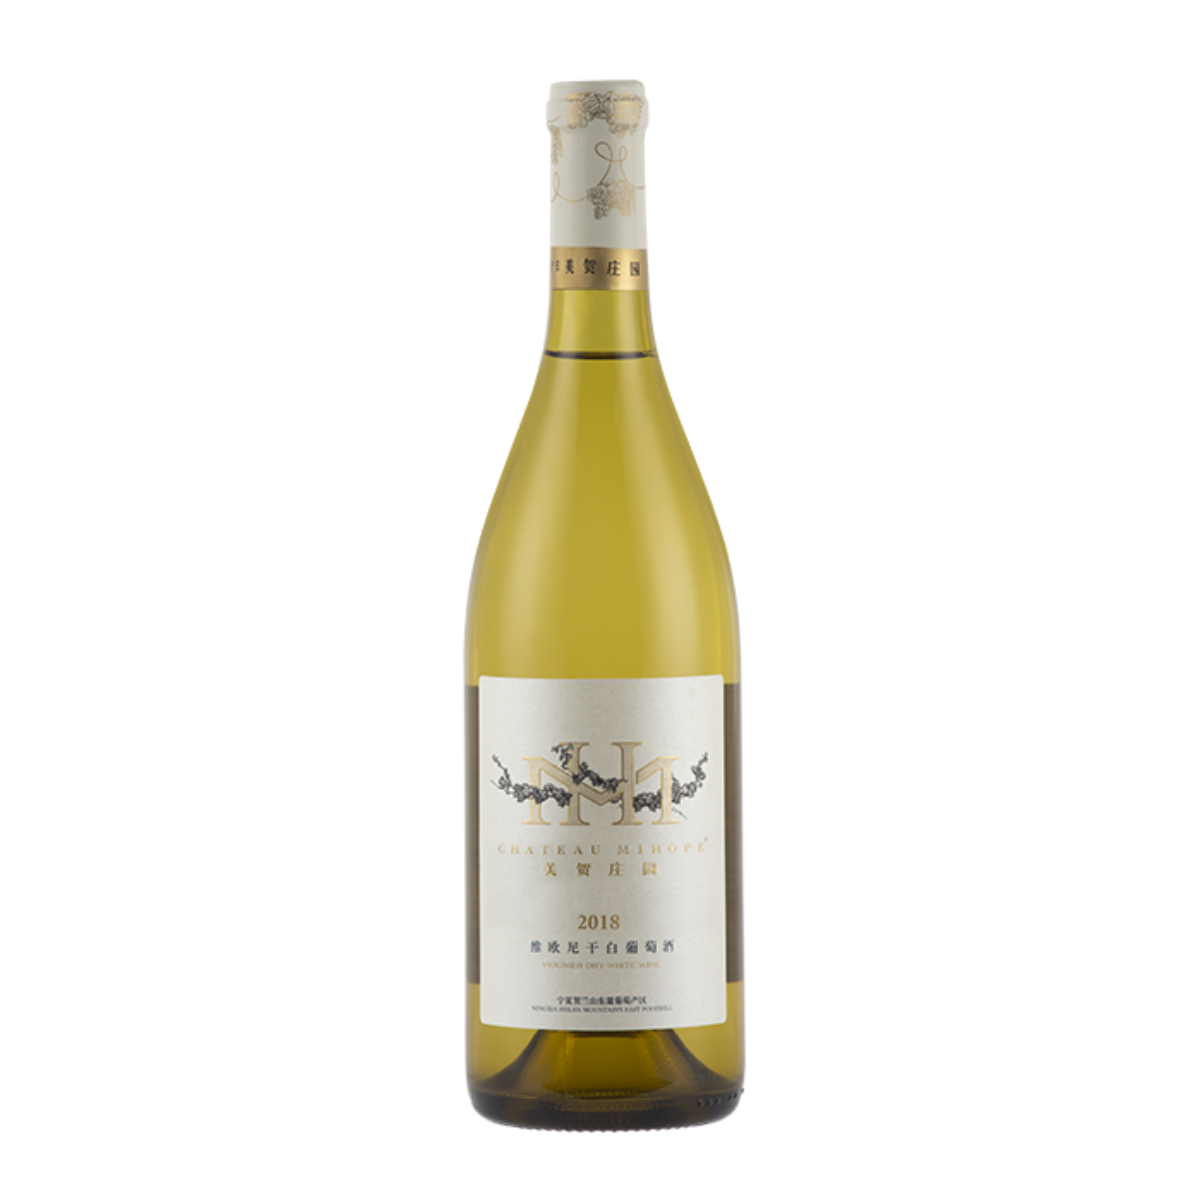 Mihope Viognier Dry White Wine 美賀莊園 維歐尼白葡萄酒 2018